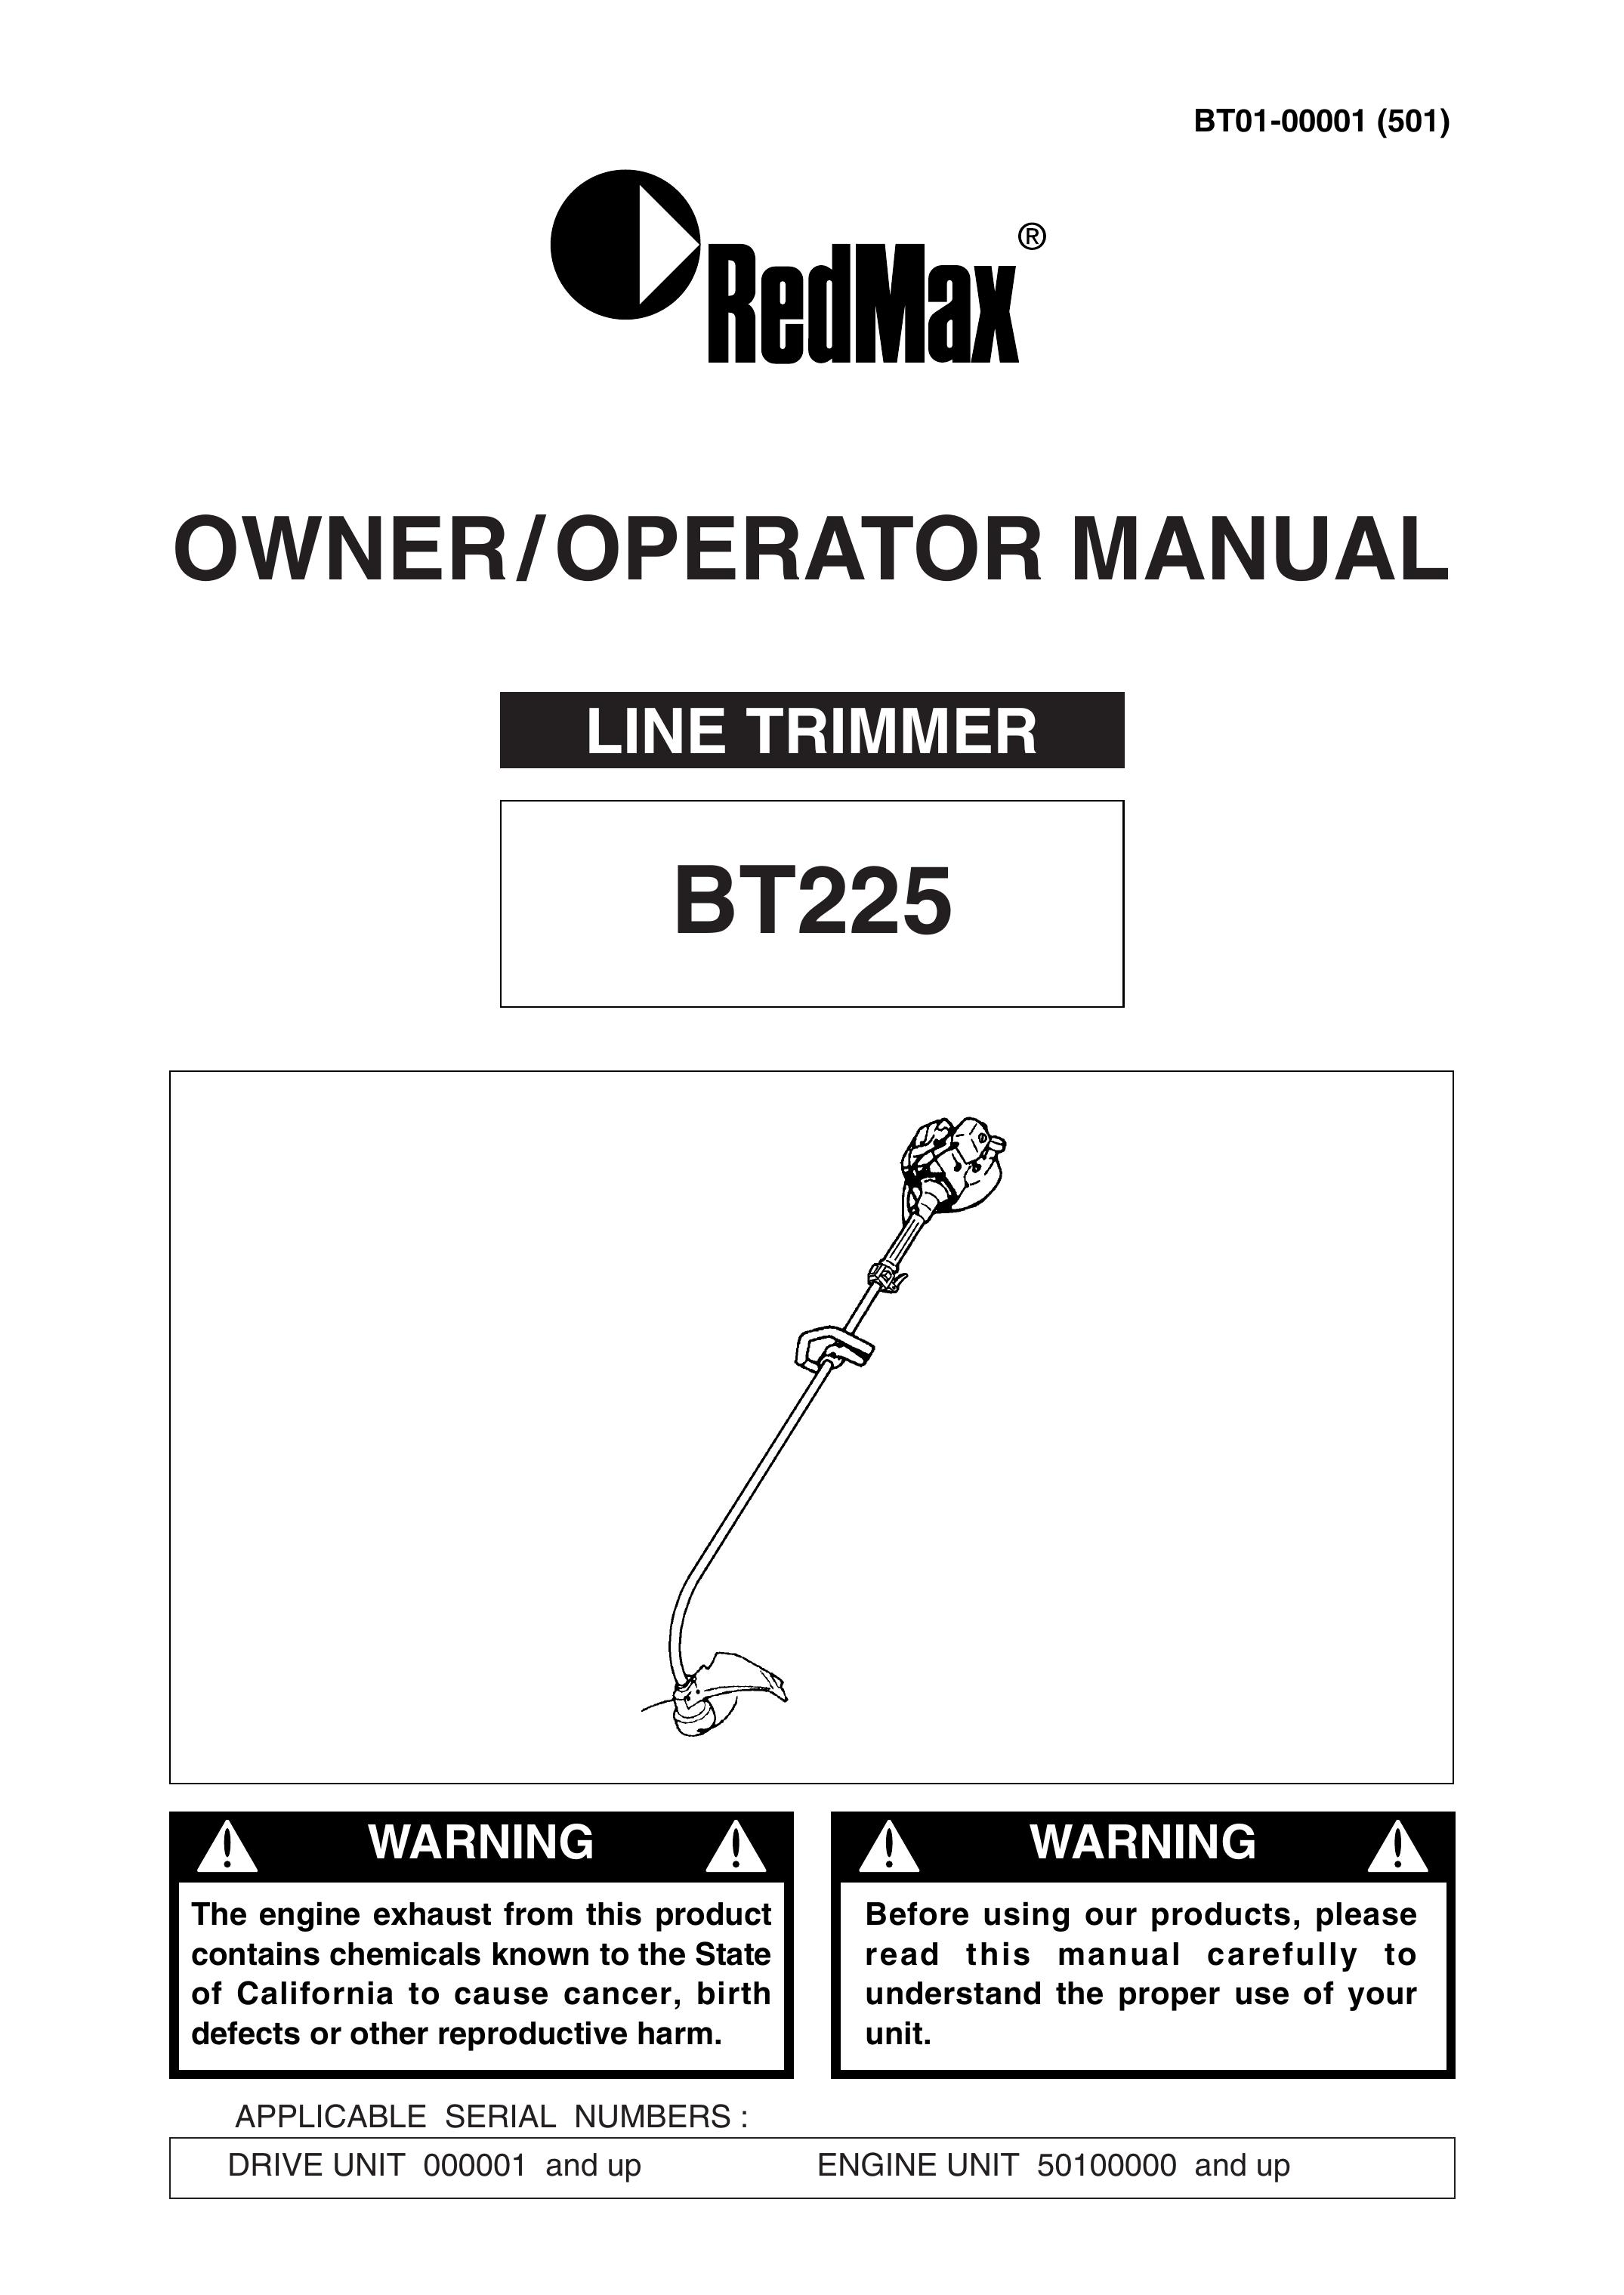 RedMax BT225 Trimmer User Manual